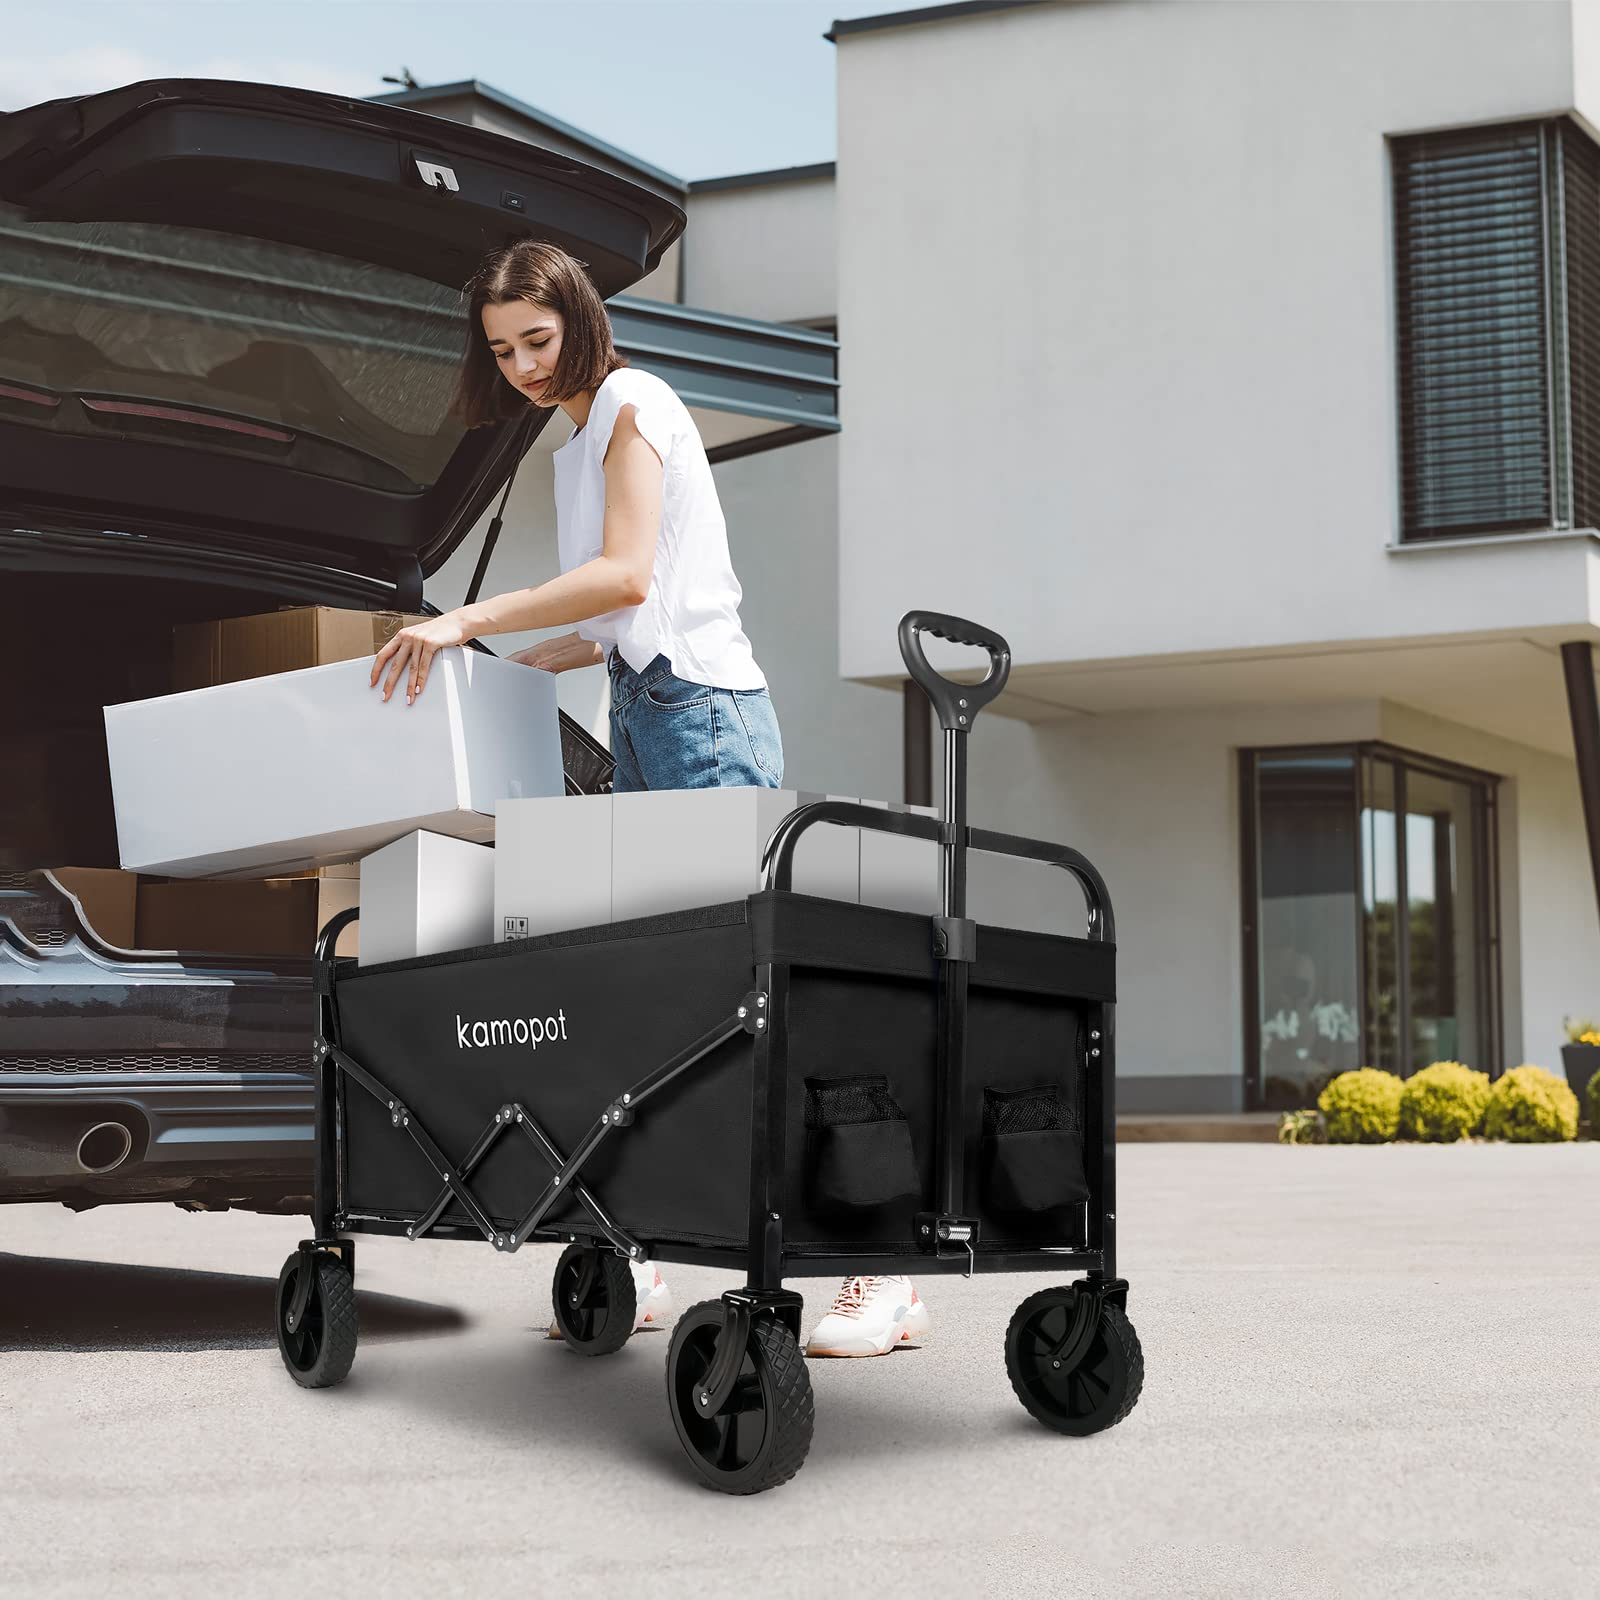 Kamopot Collapsible Wagon Cart,Folding Wagon for Grocery,Foldable Beach Wagon.Utility Shopping Cart on Wheels.220lb Heavy Duty w/Cupholders & DIY Wheels (Black)